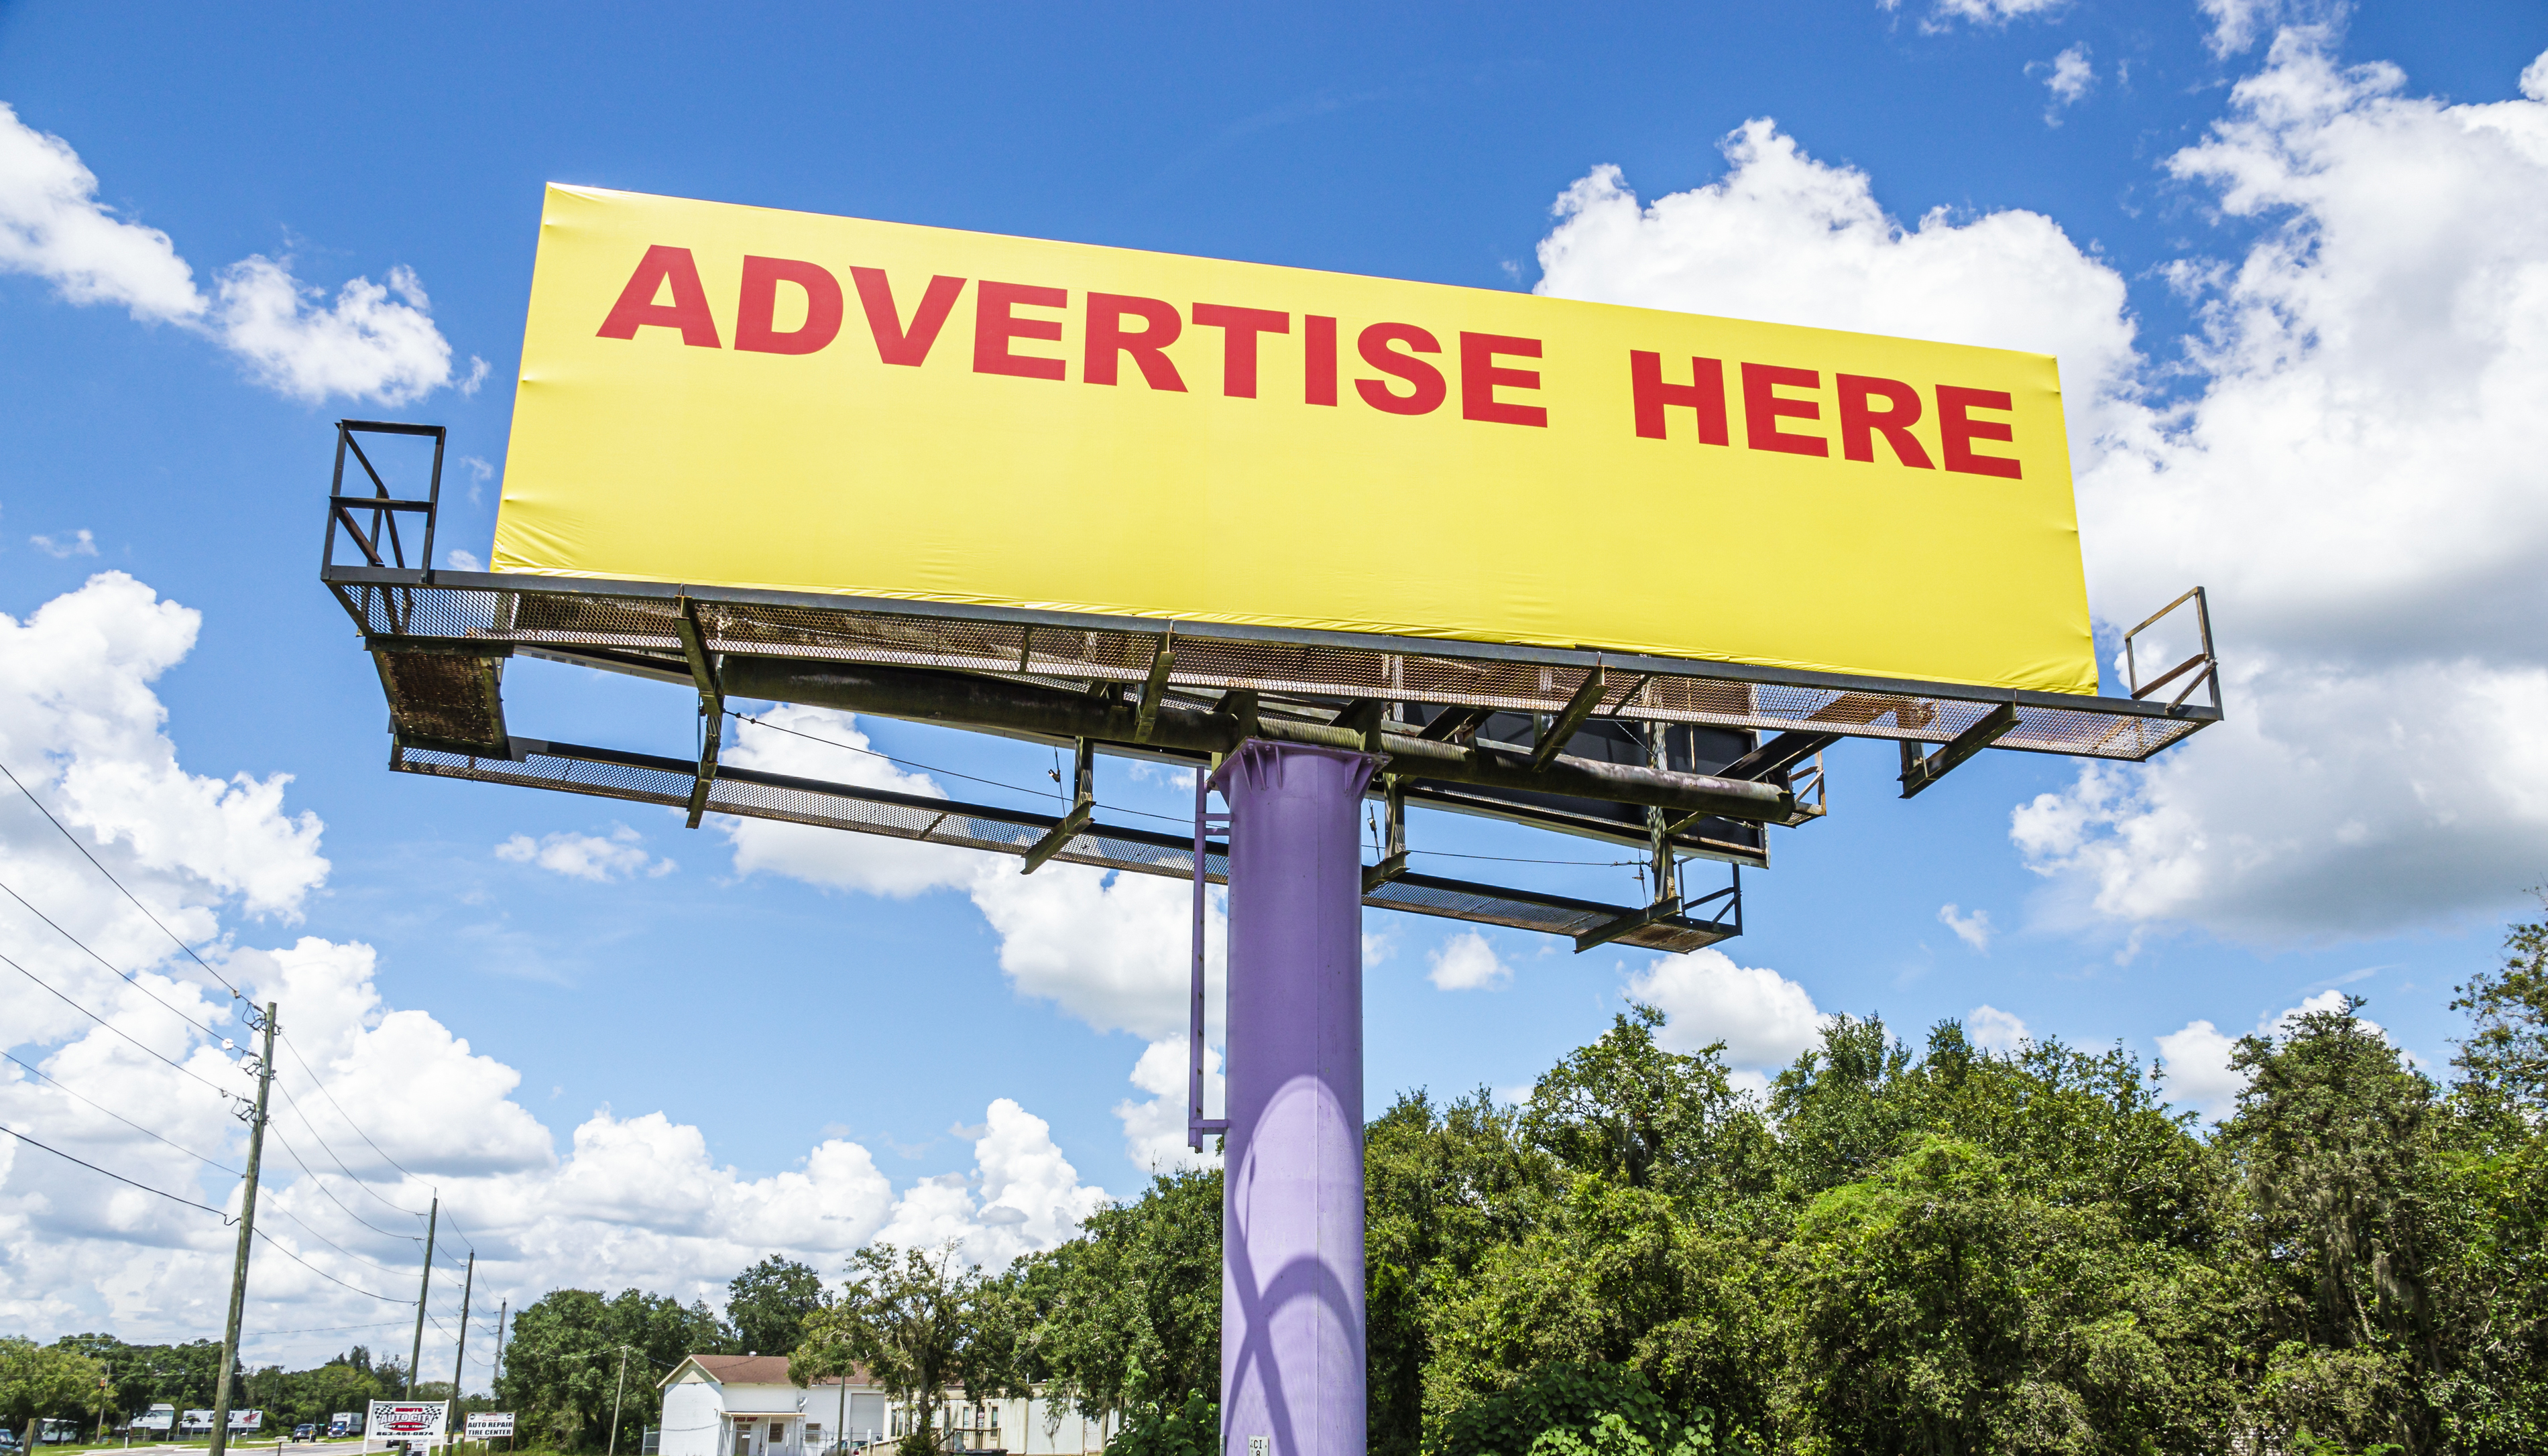 A roadside billboard in Arcadia, Florida, reads “Advertise Here.”